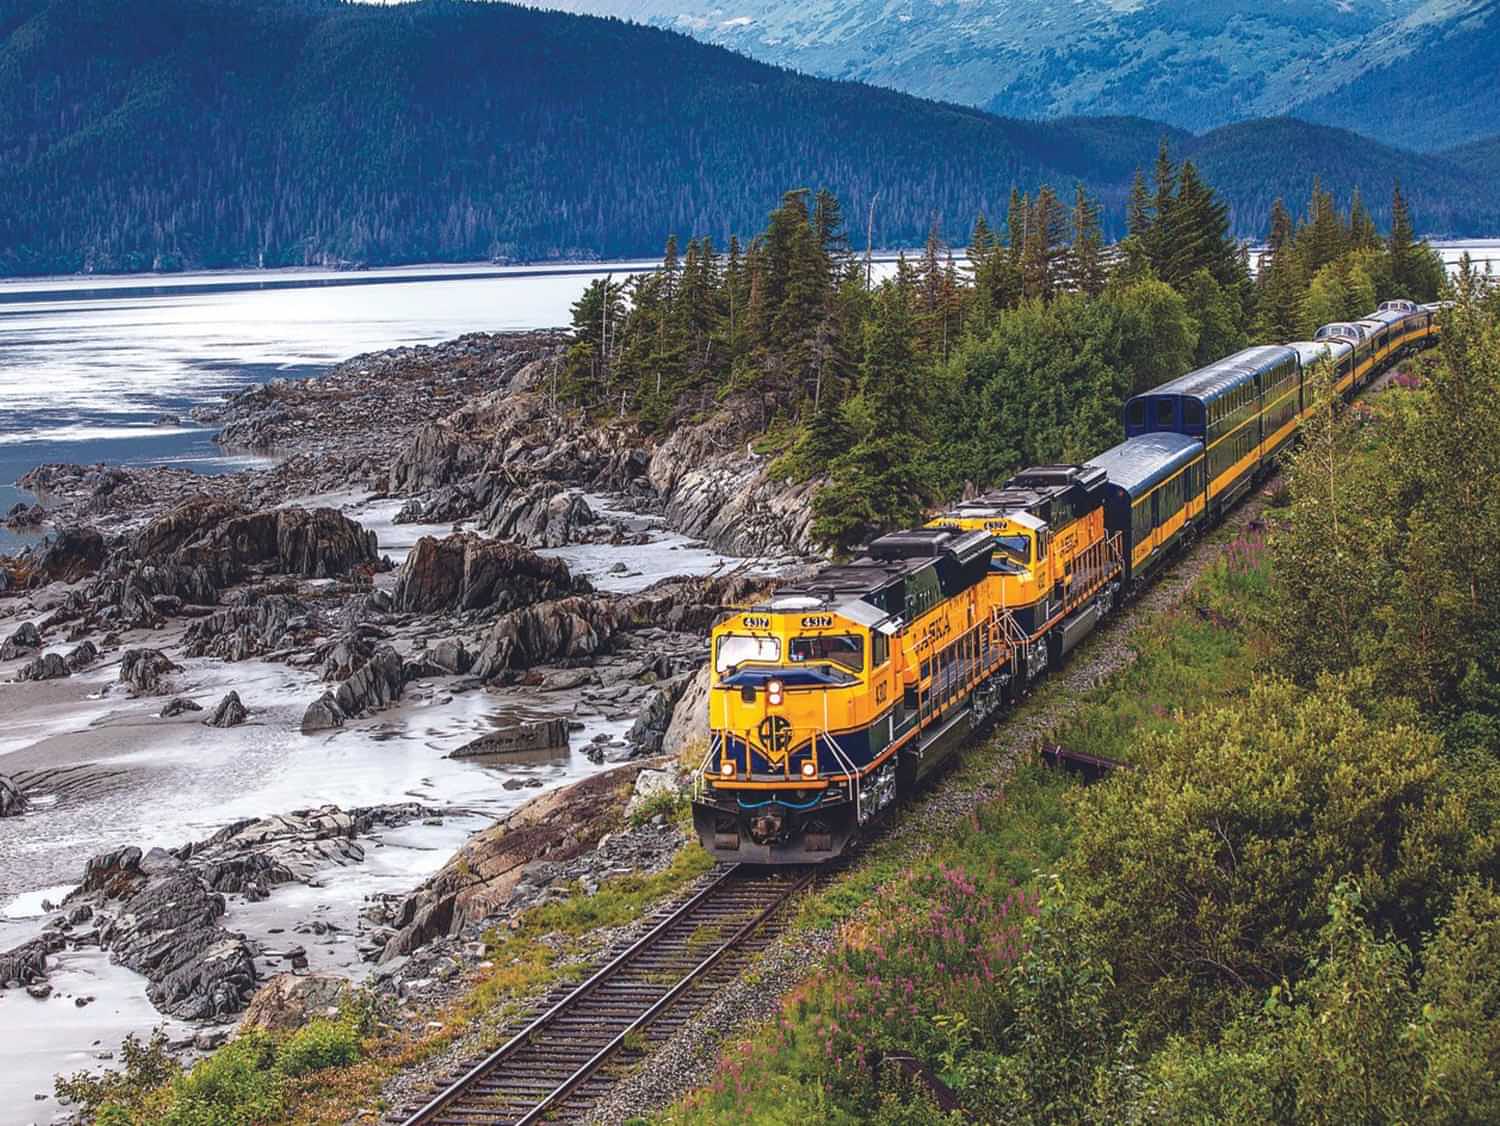 an Alaska Railroad train travels tracks by a body of water